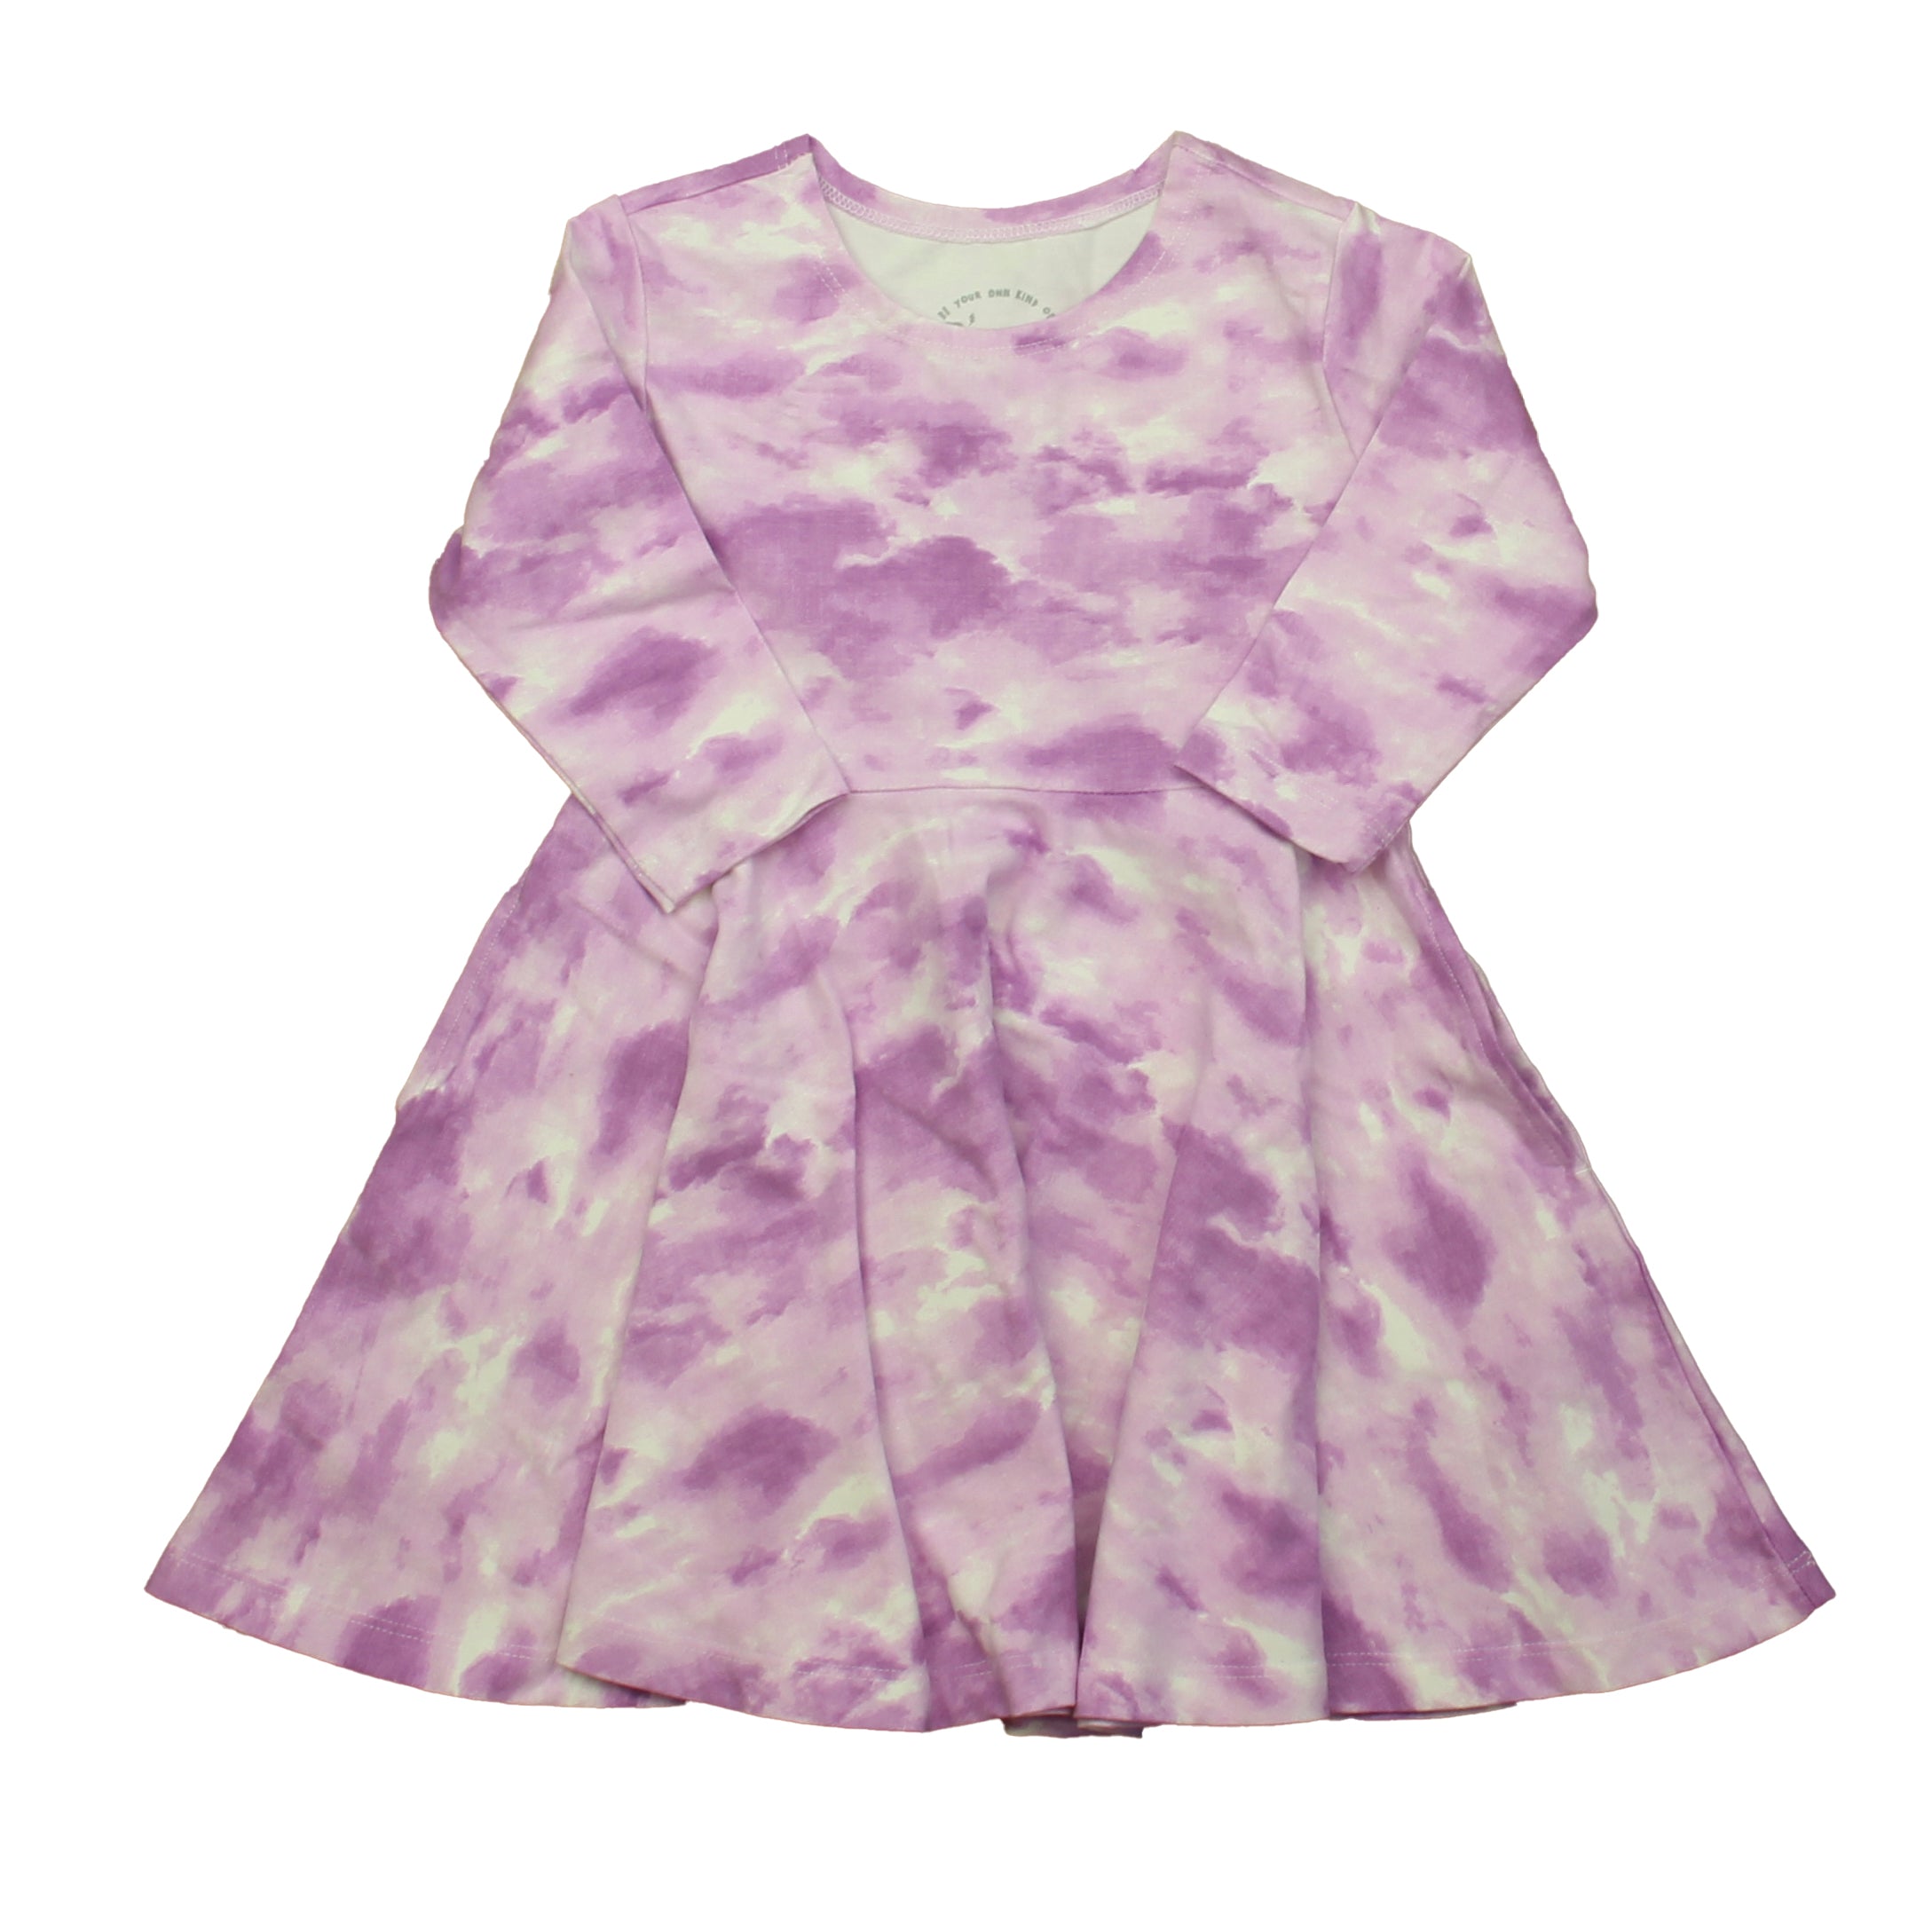 Pre-owned Purple Dress size: 3T